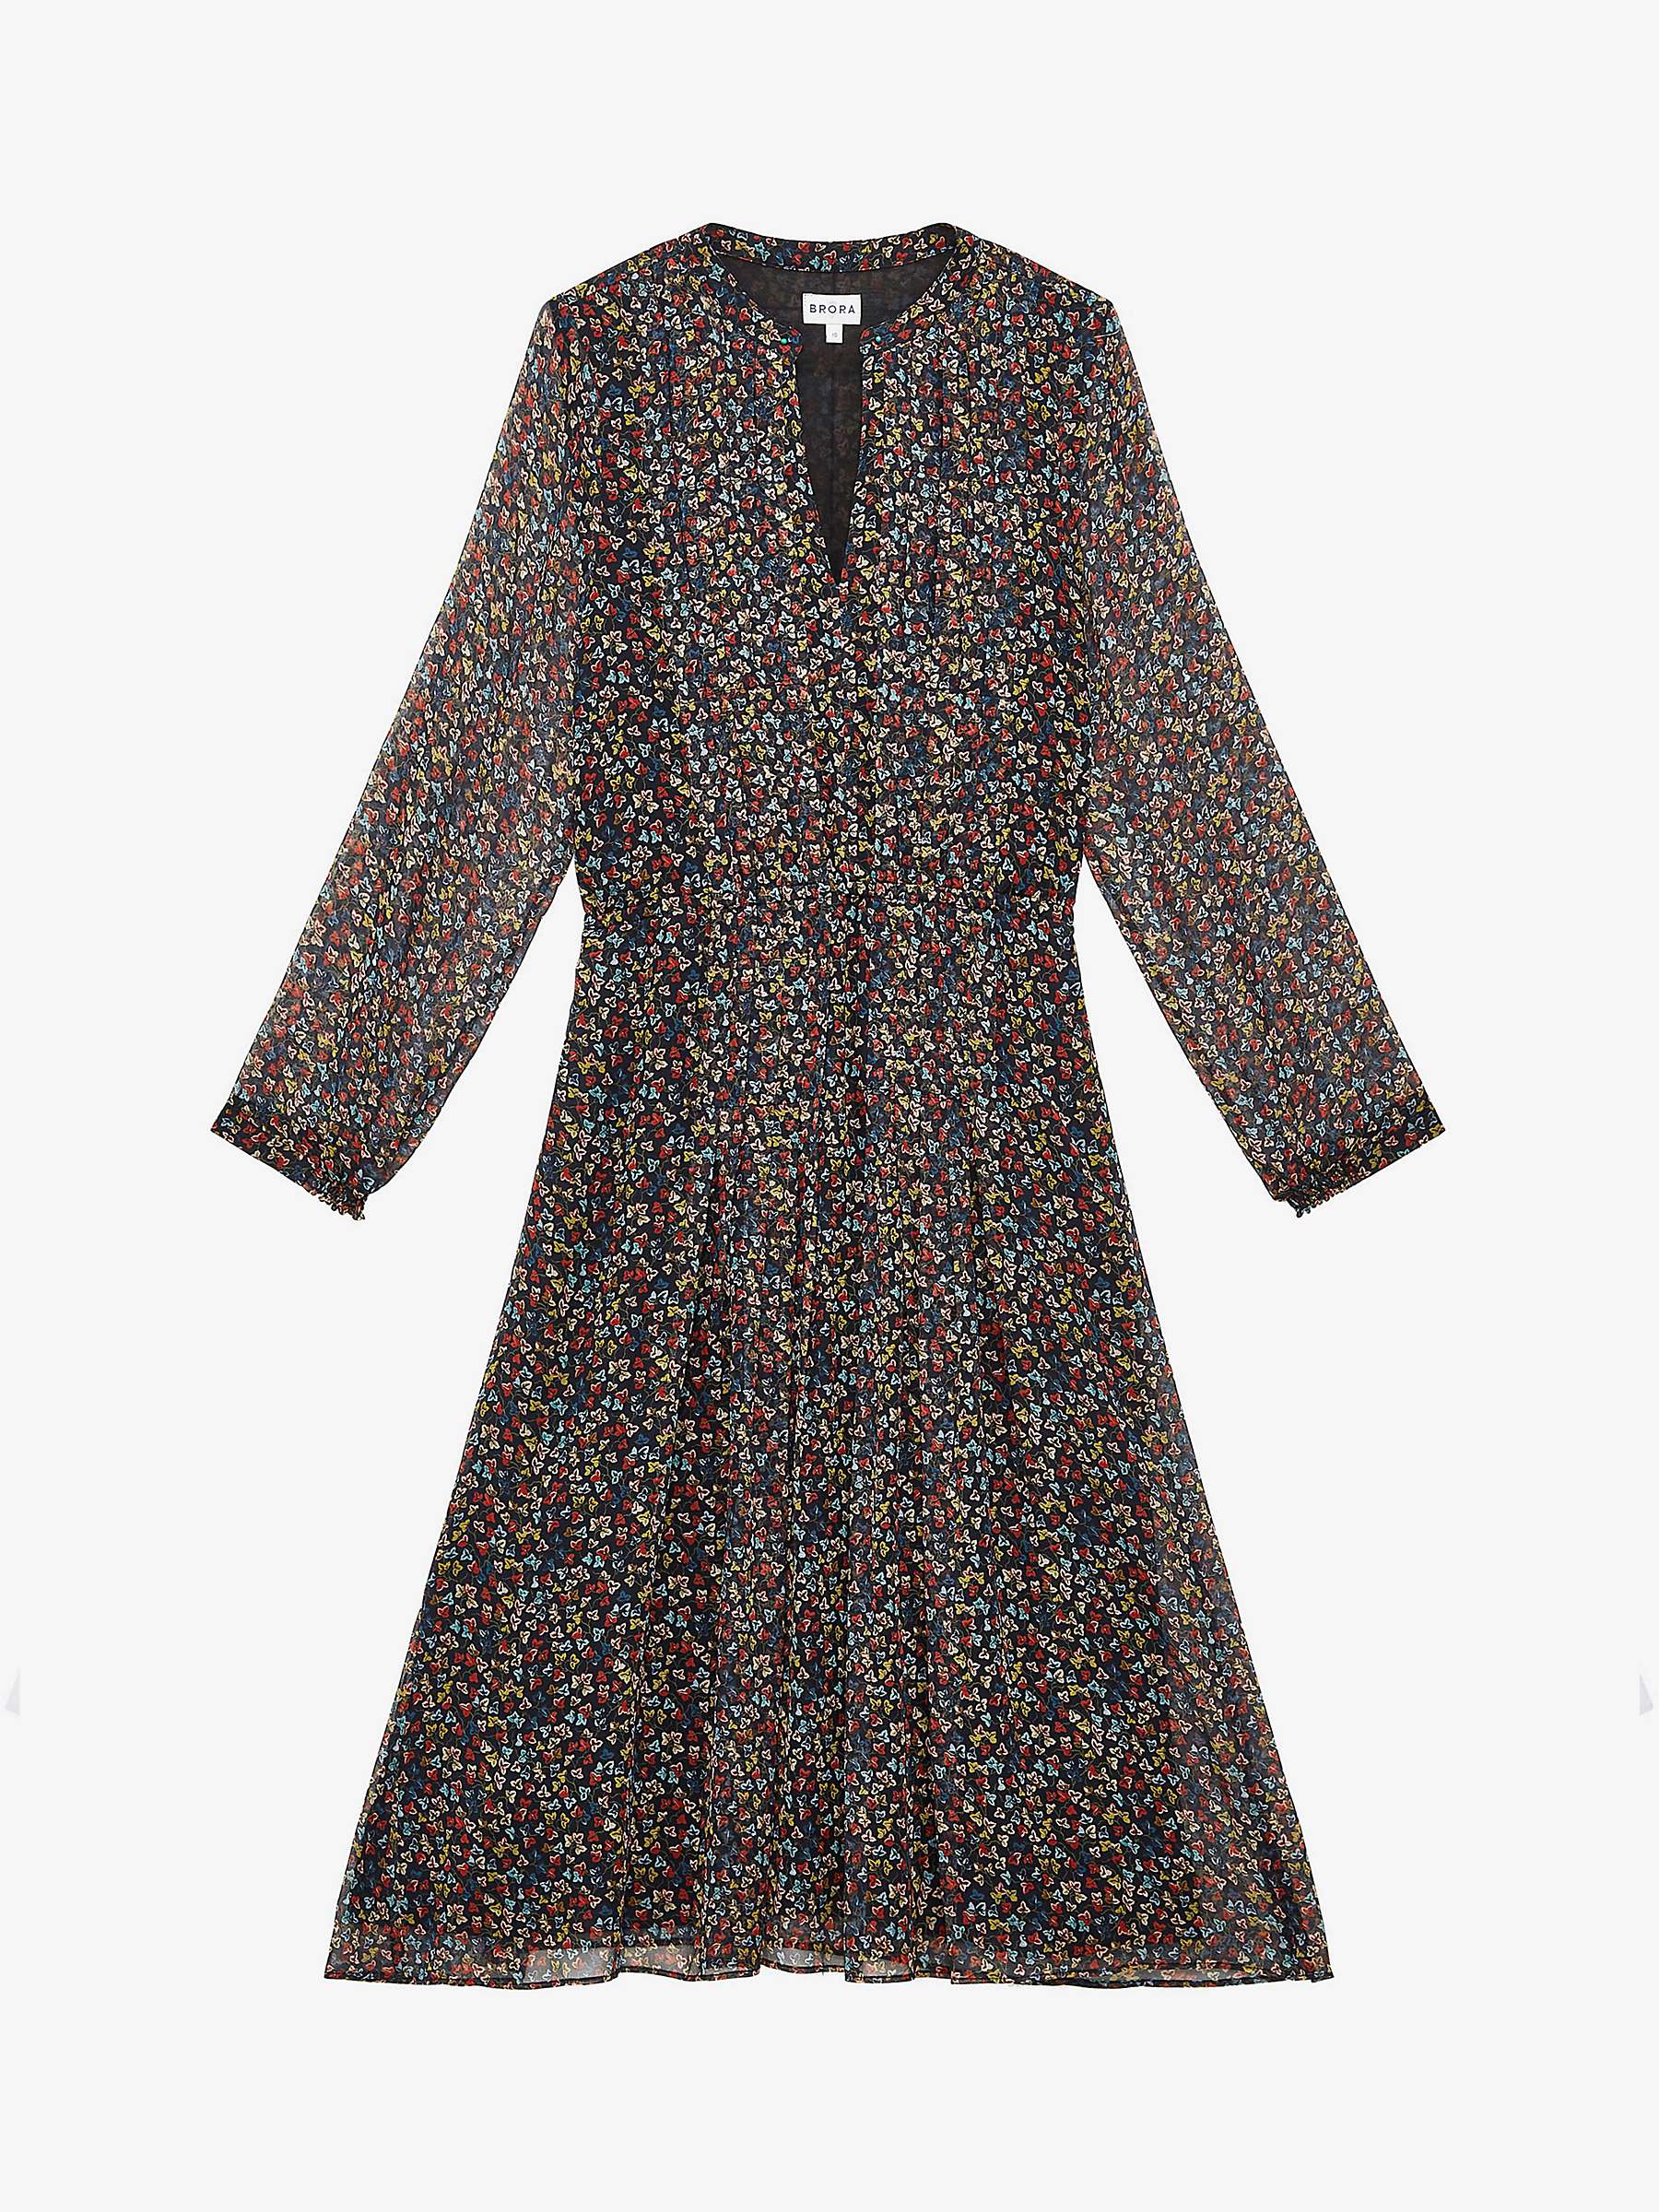 Buy Brora Liberty Print Silk Chiffon Pintuck Dress, Russet Leaf Online at johnlewis.com